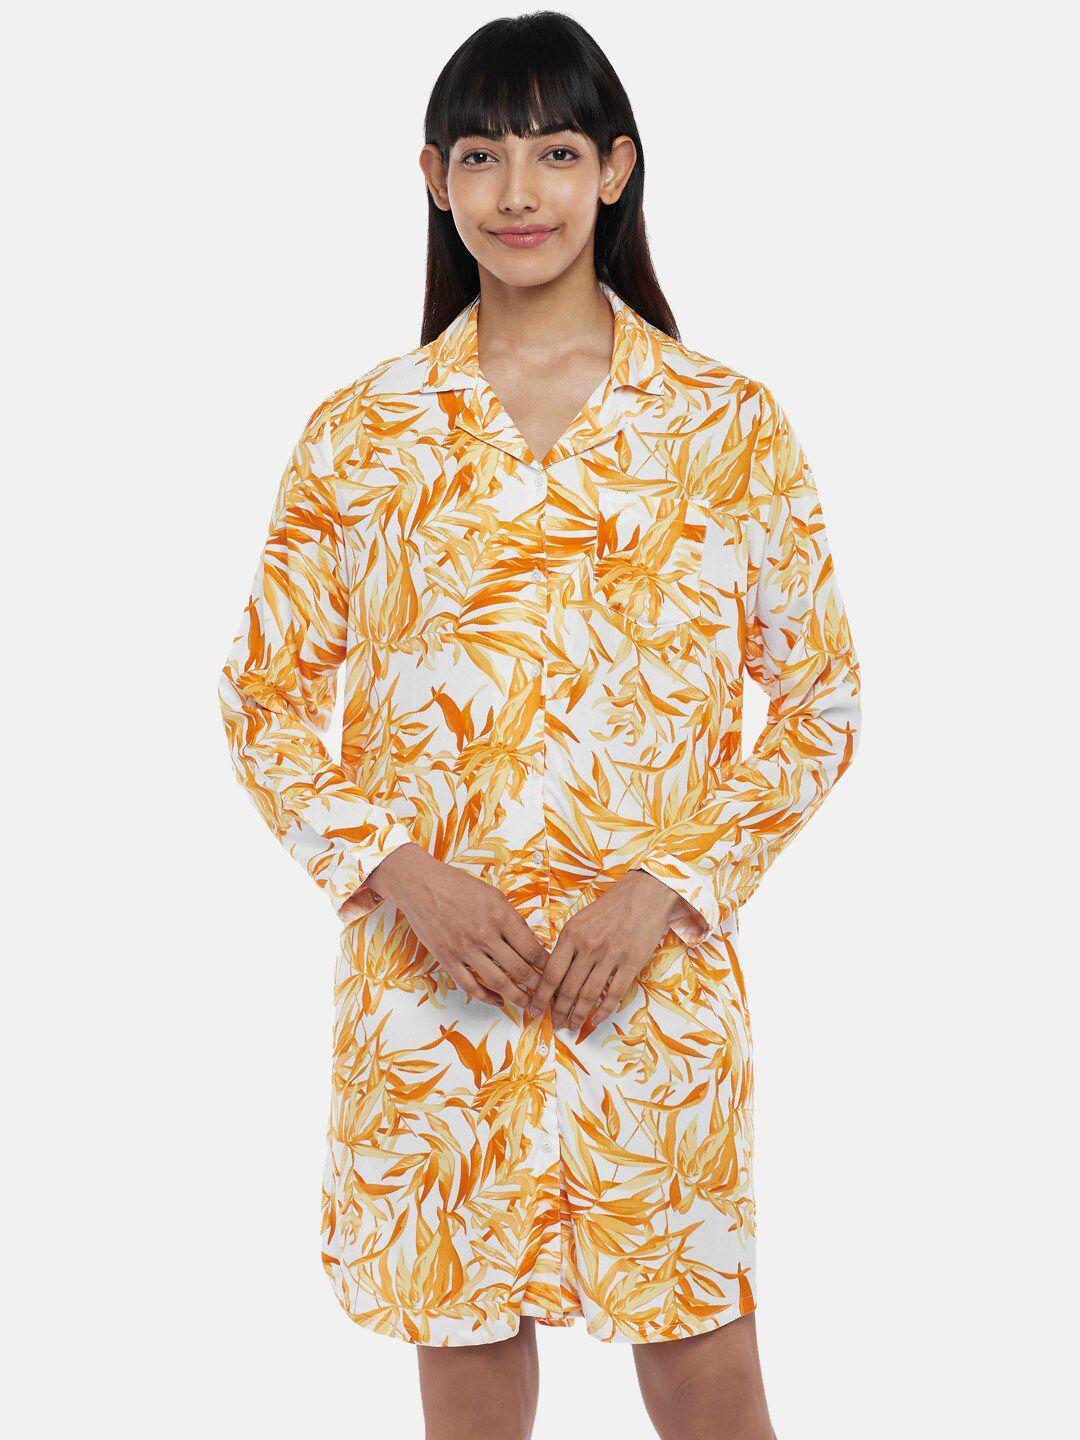 dreamz-by-pantaloons-orange-printed-nightdress